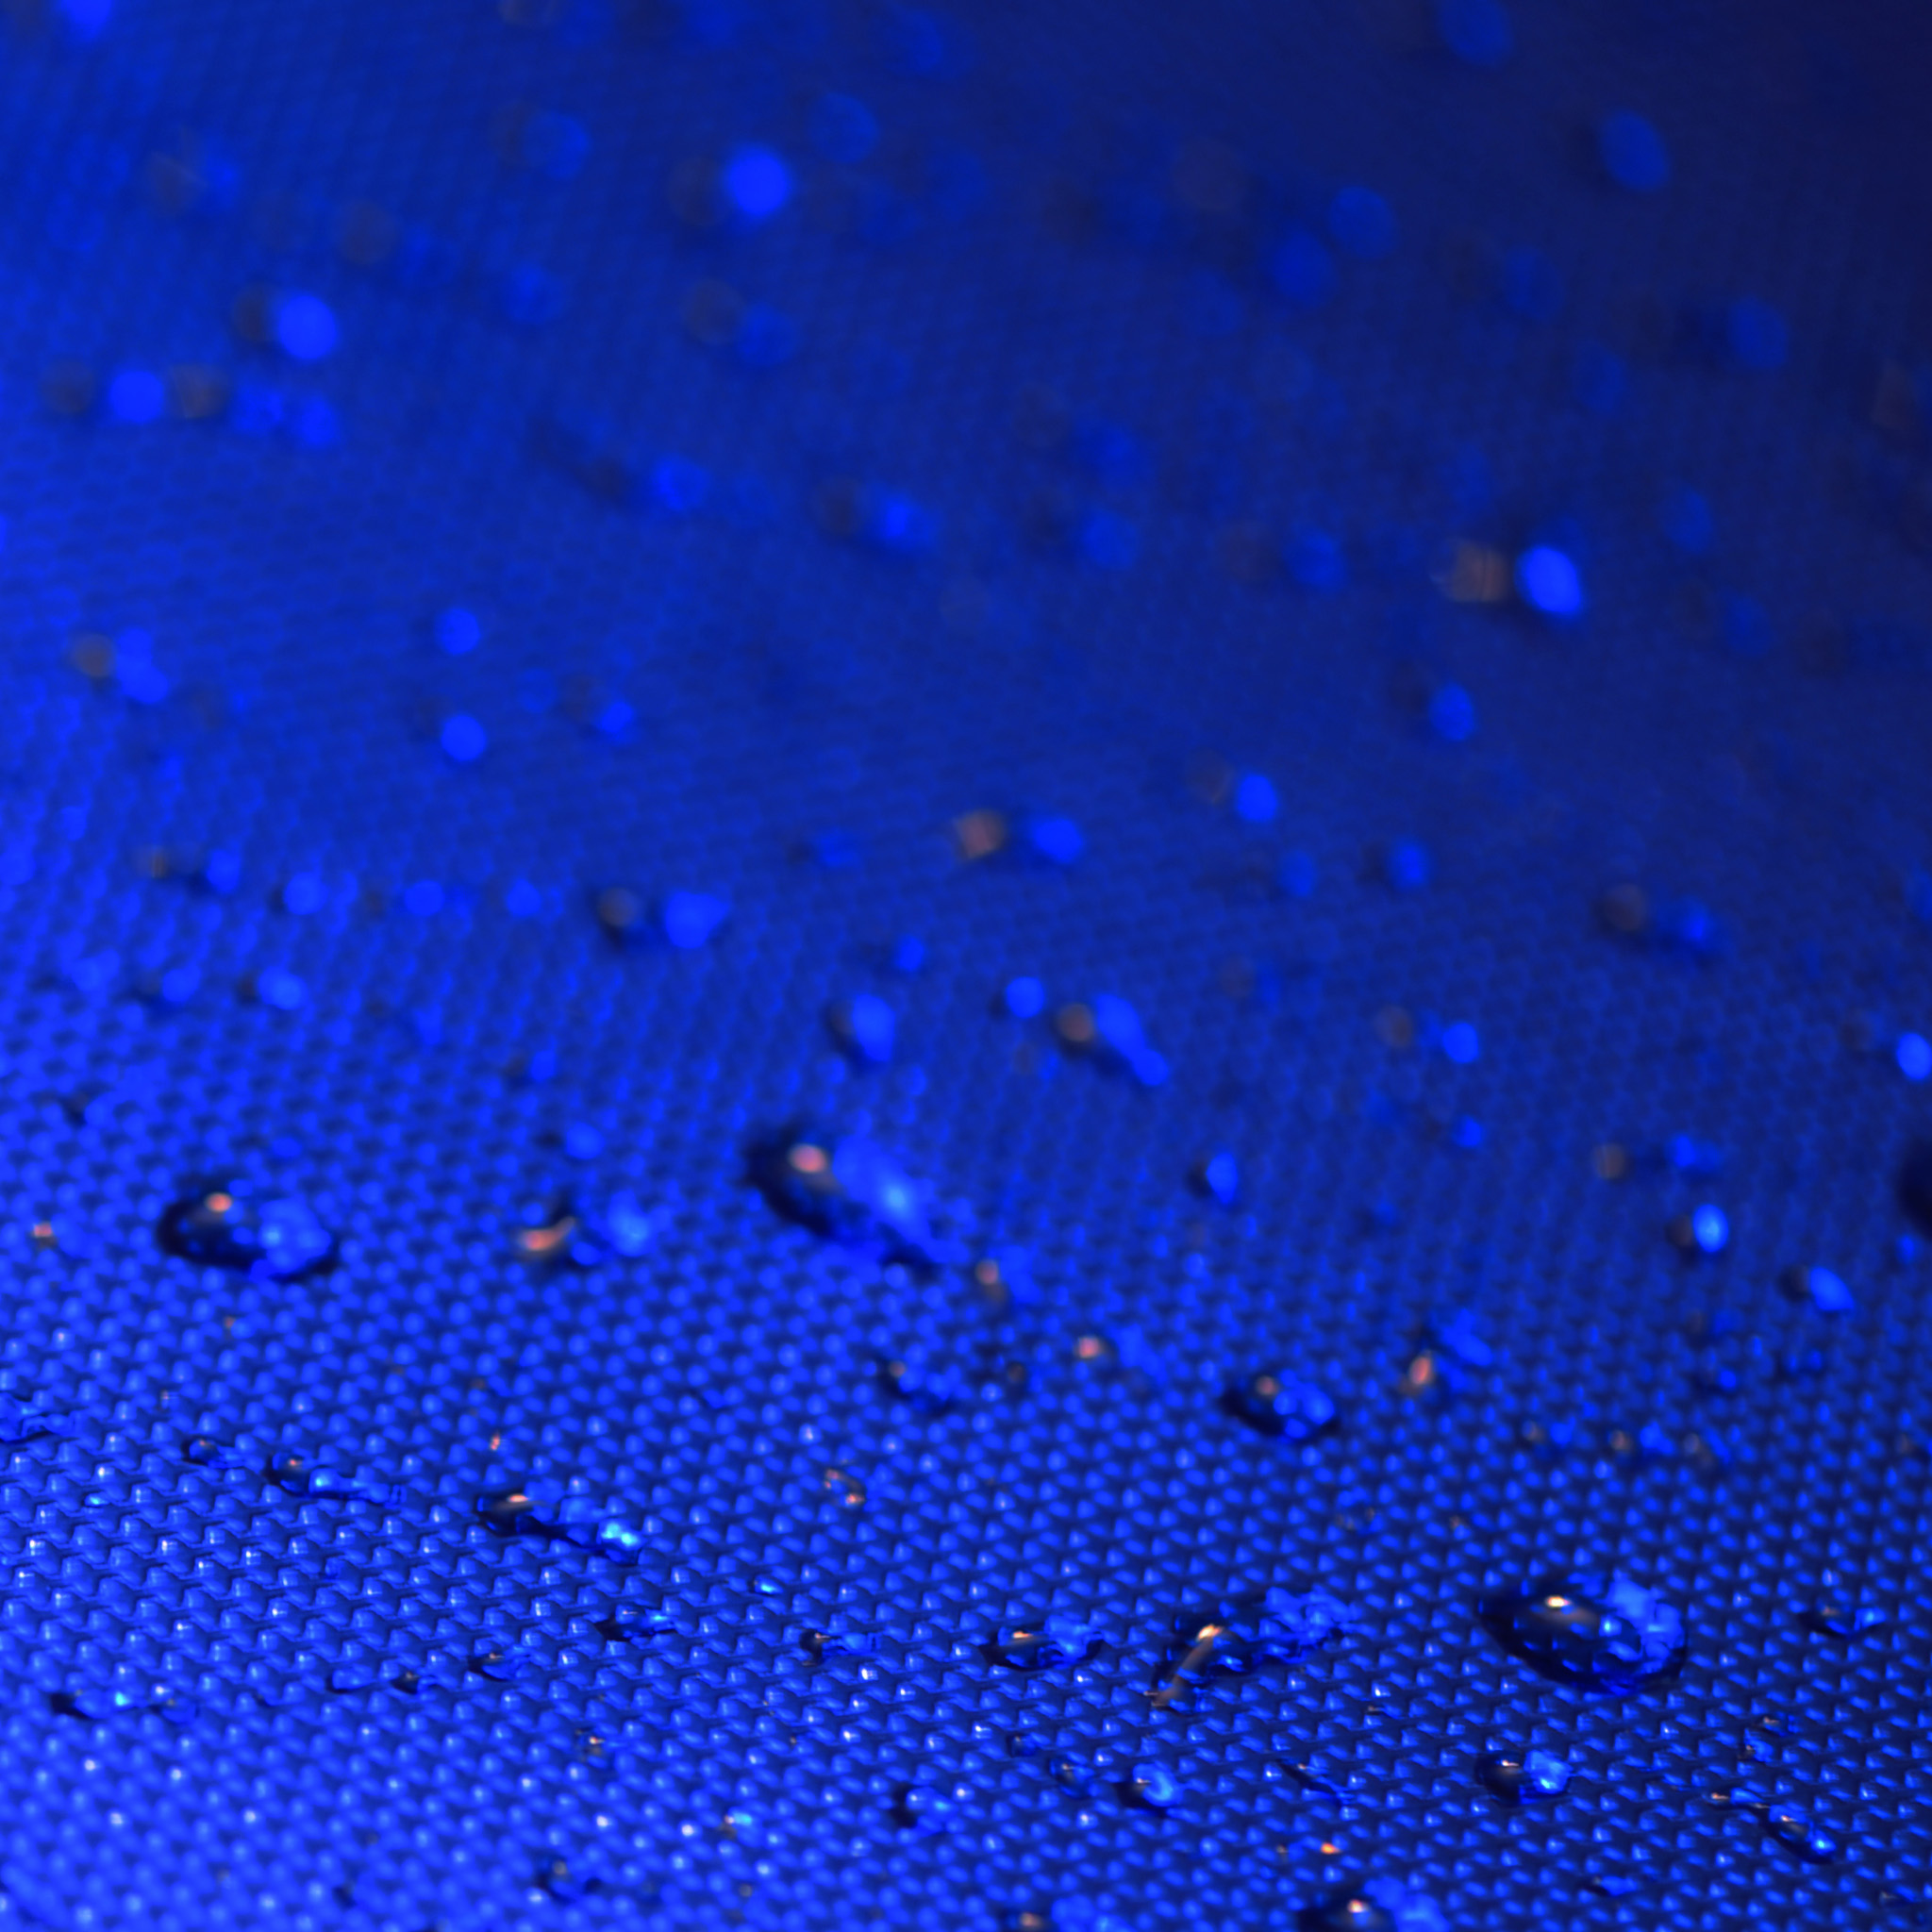 swissrock - blue water drops ipad wallpaper